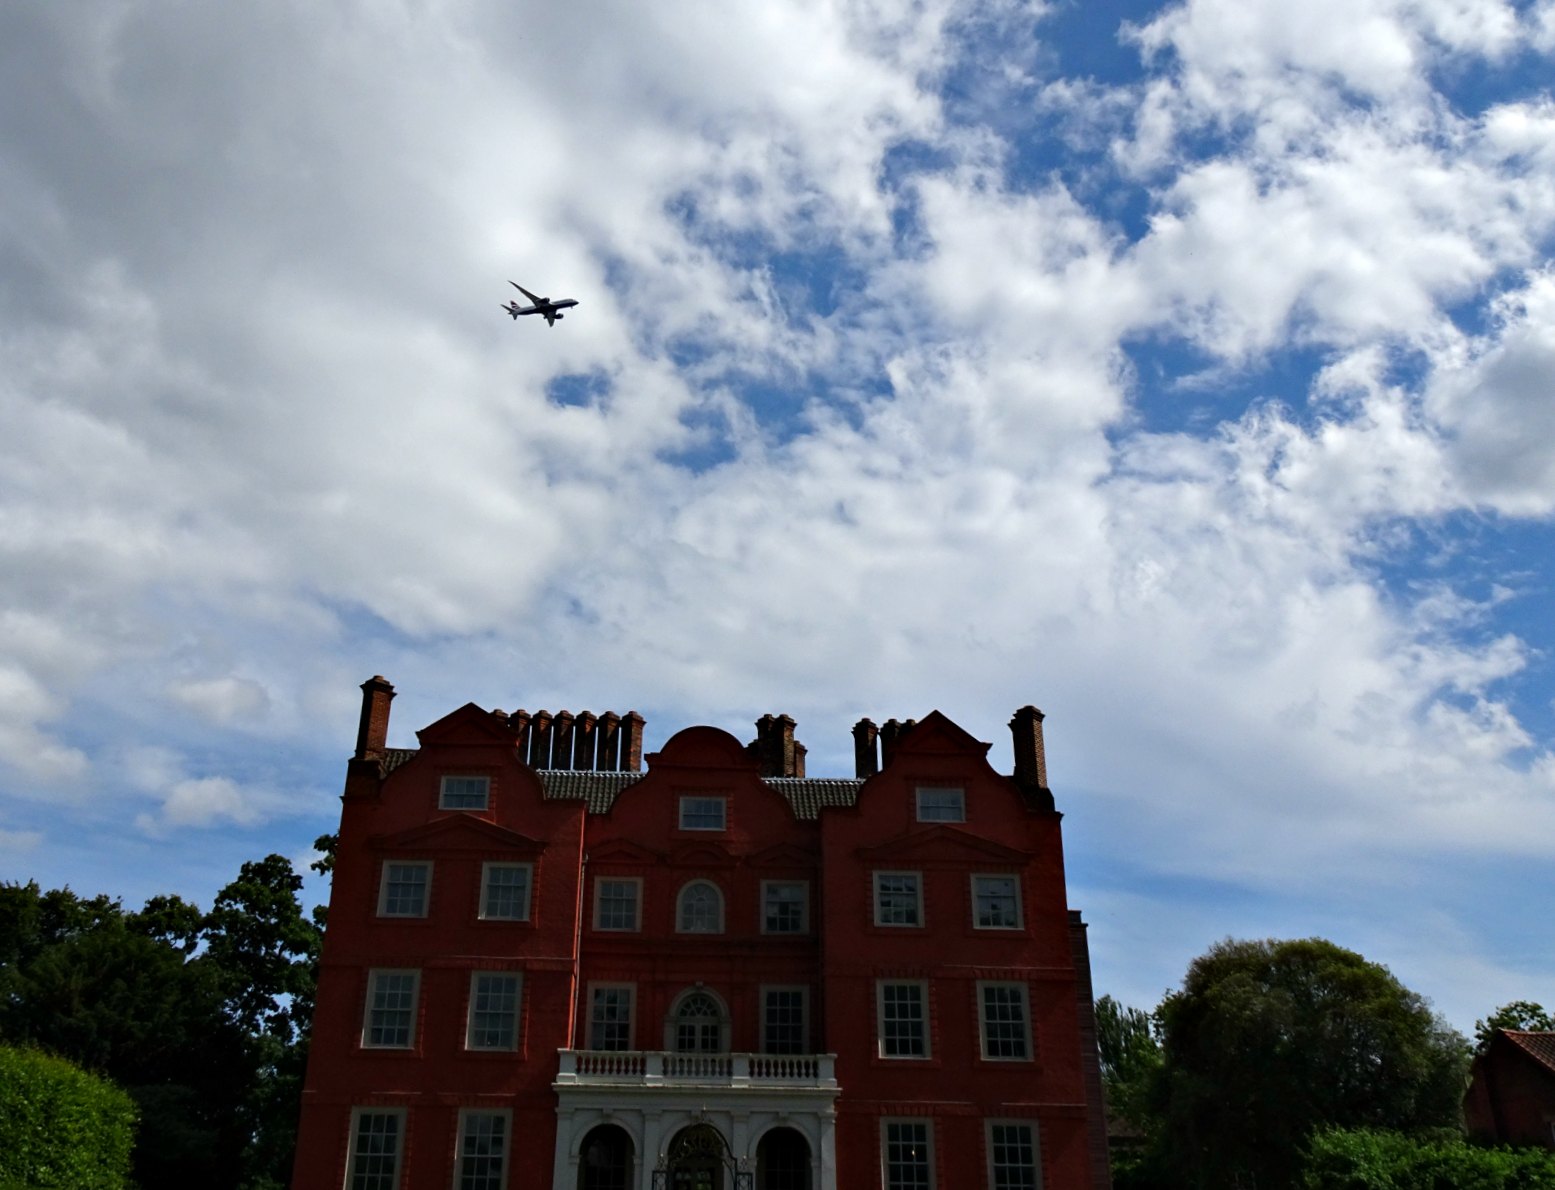 Kew Palace on the flight path to Heathrow